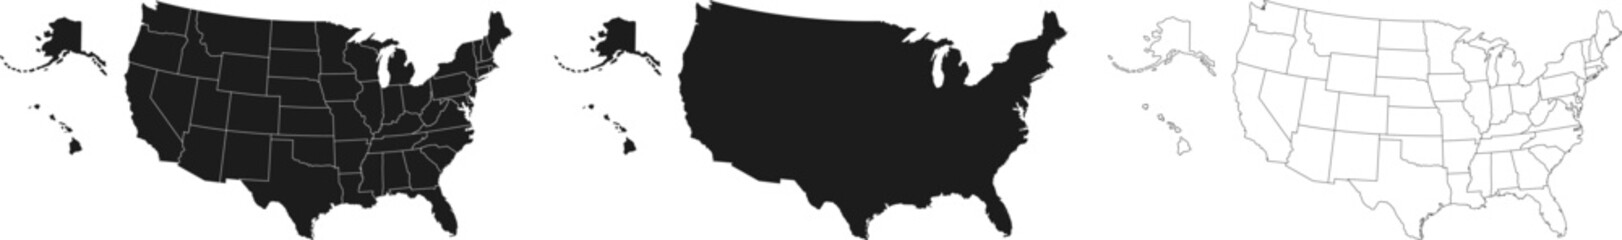 States of America territory. North America and Alaska. Vector illustration. EPS 10